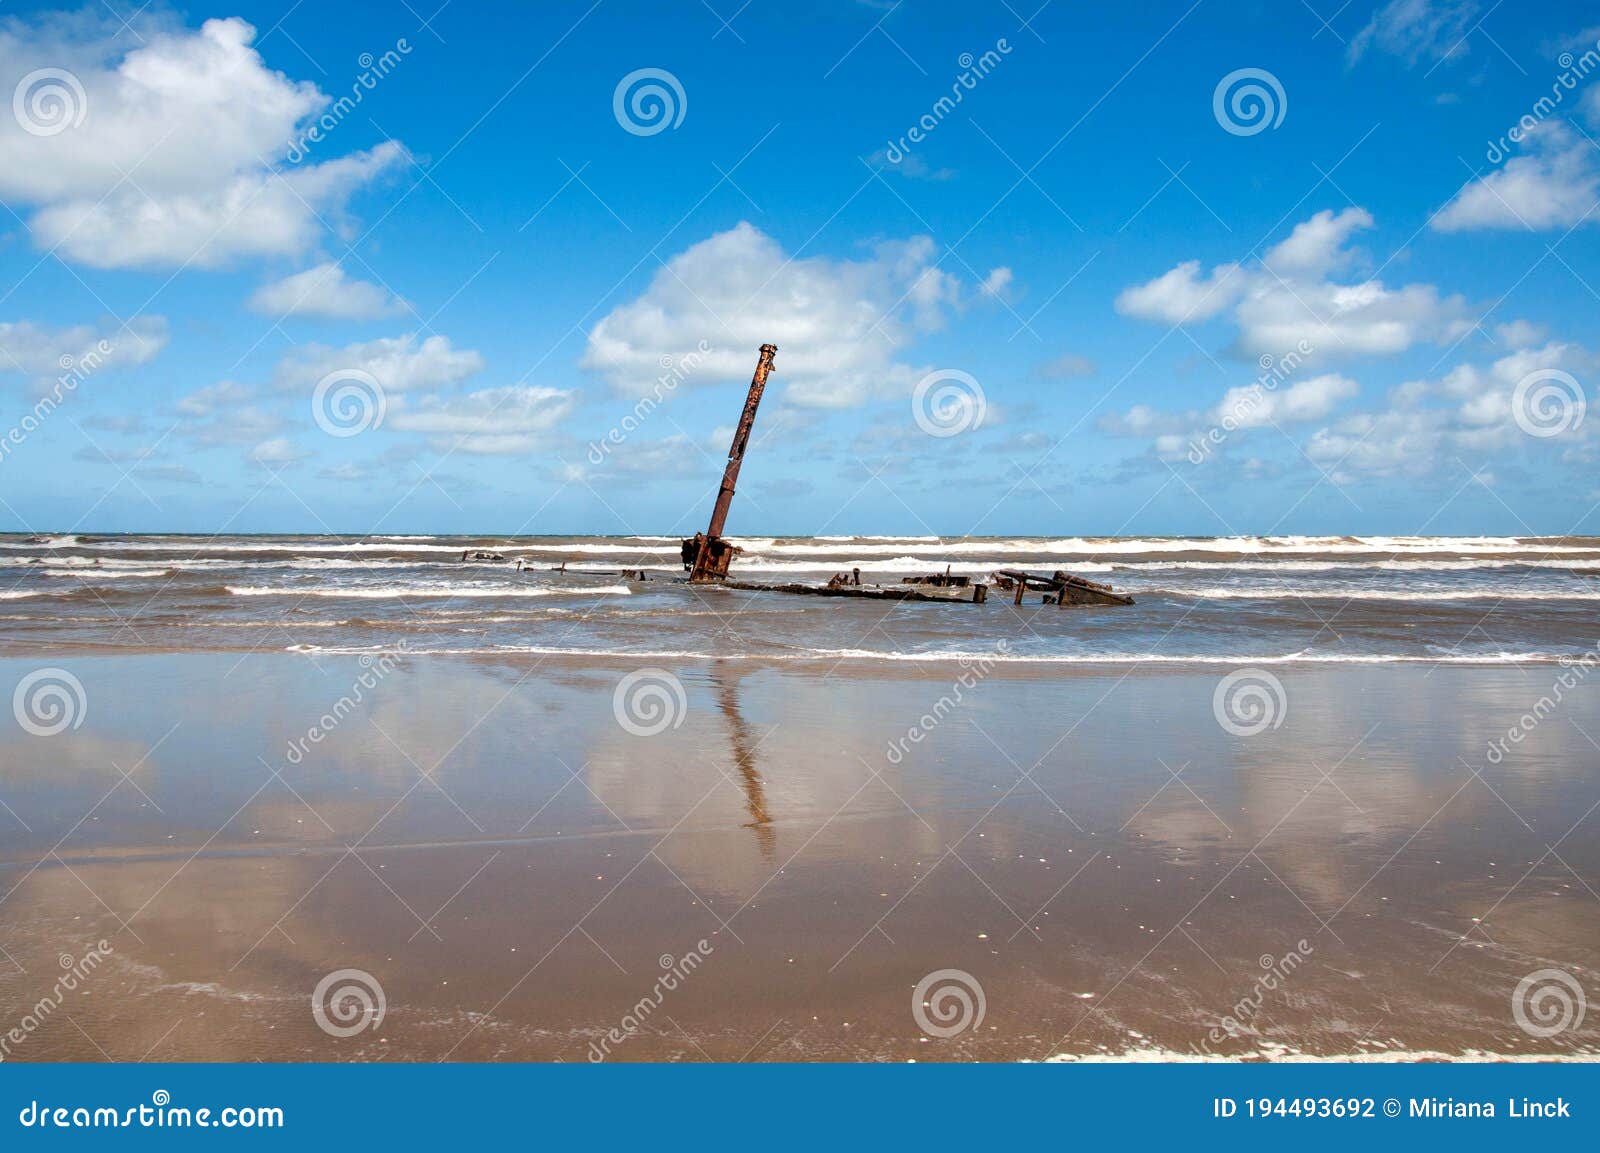 ruined boat stranded on beachside